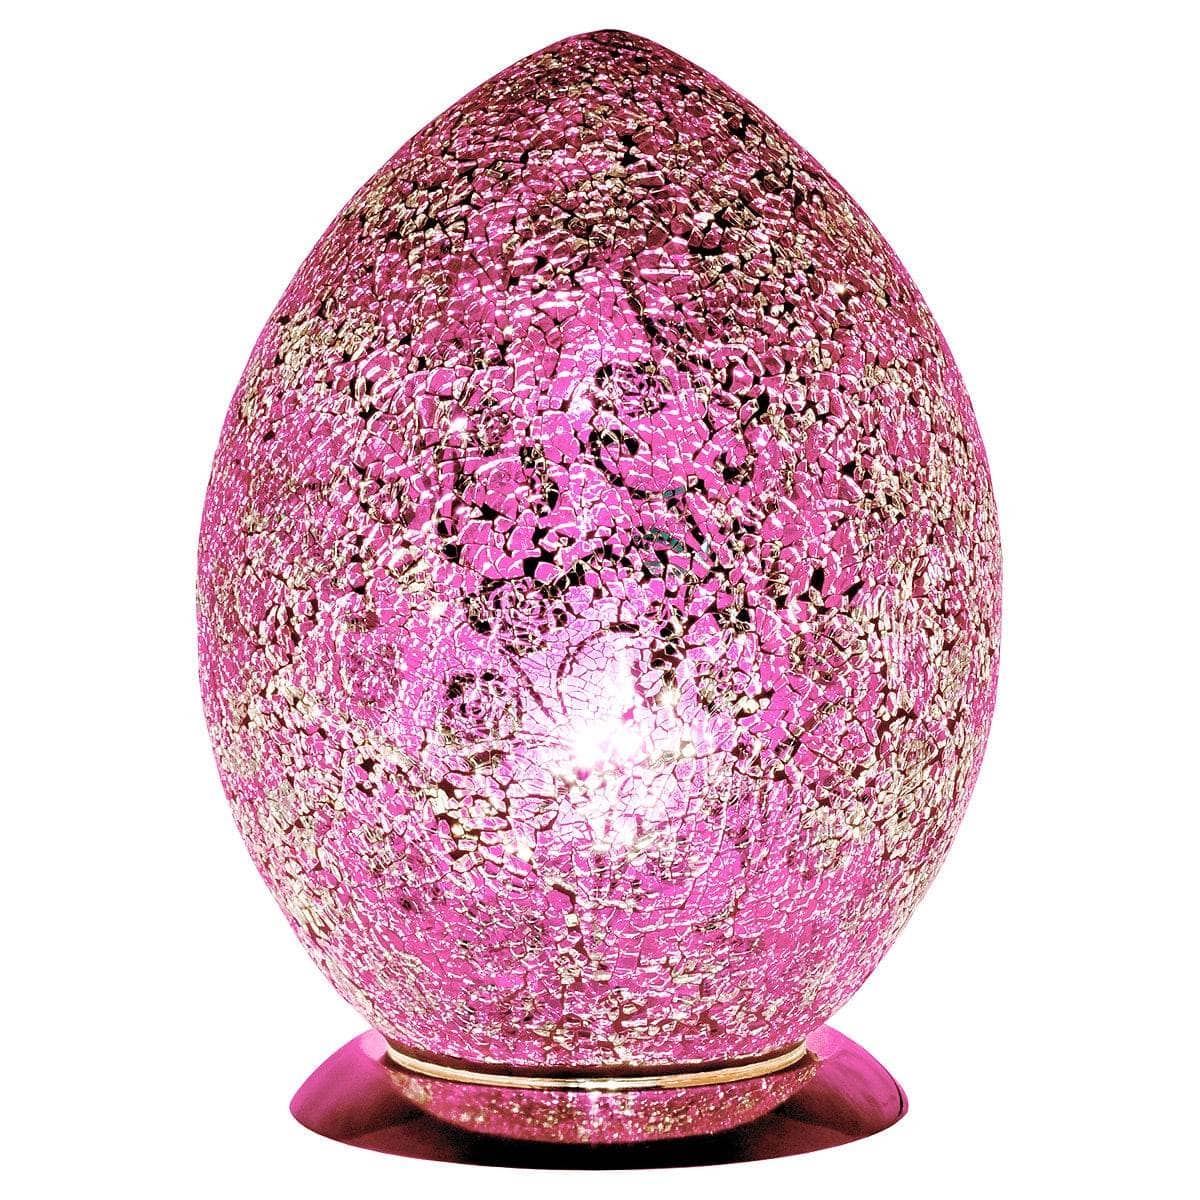  -  Febland Egg Lamp Mosaic Pink/Rose Med  -  50153432